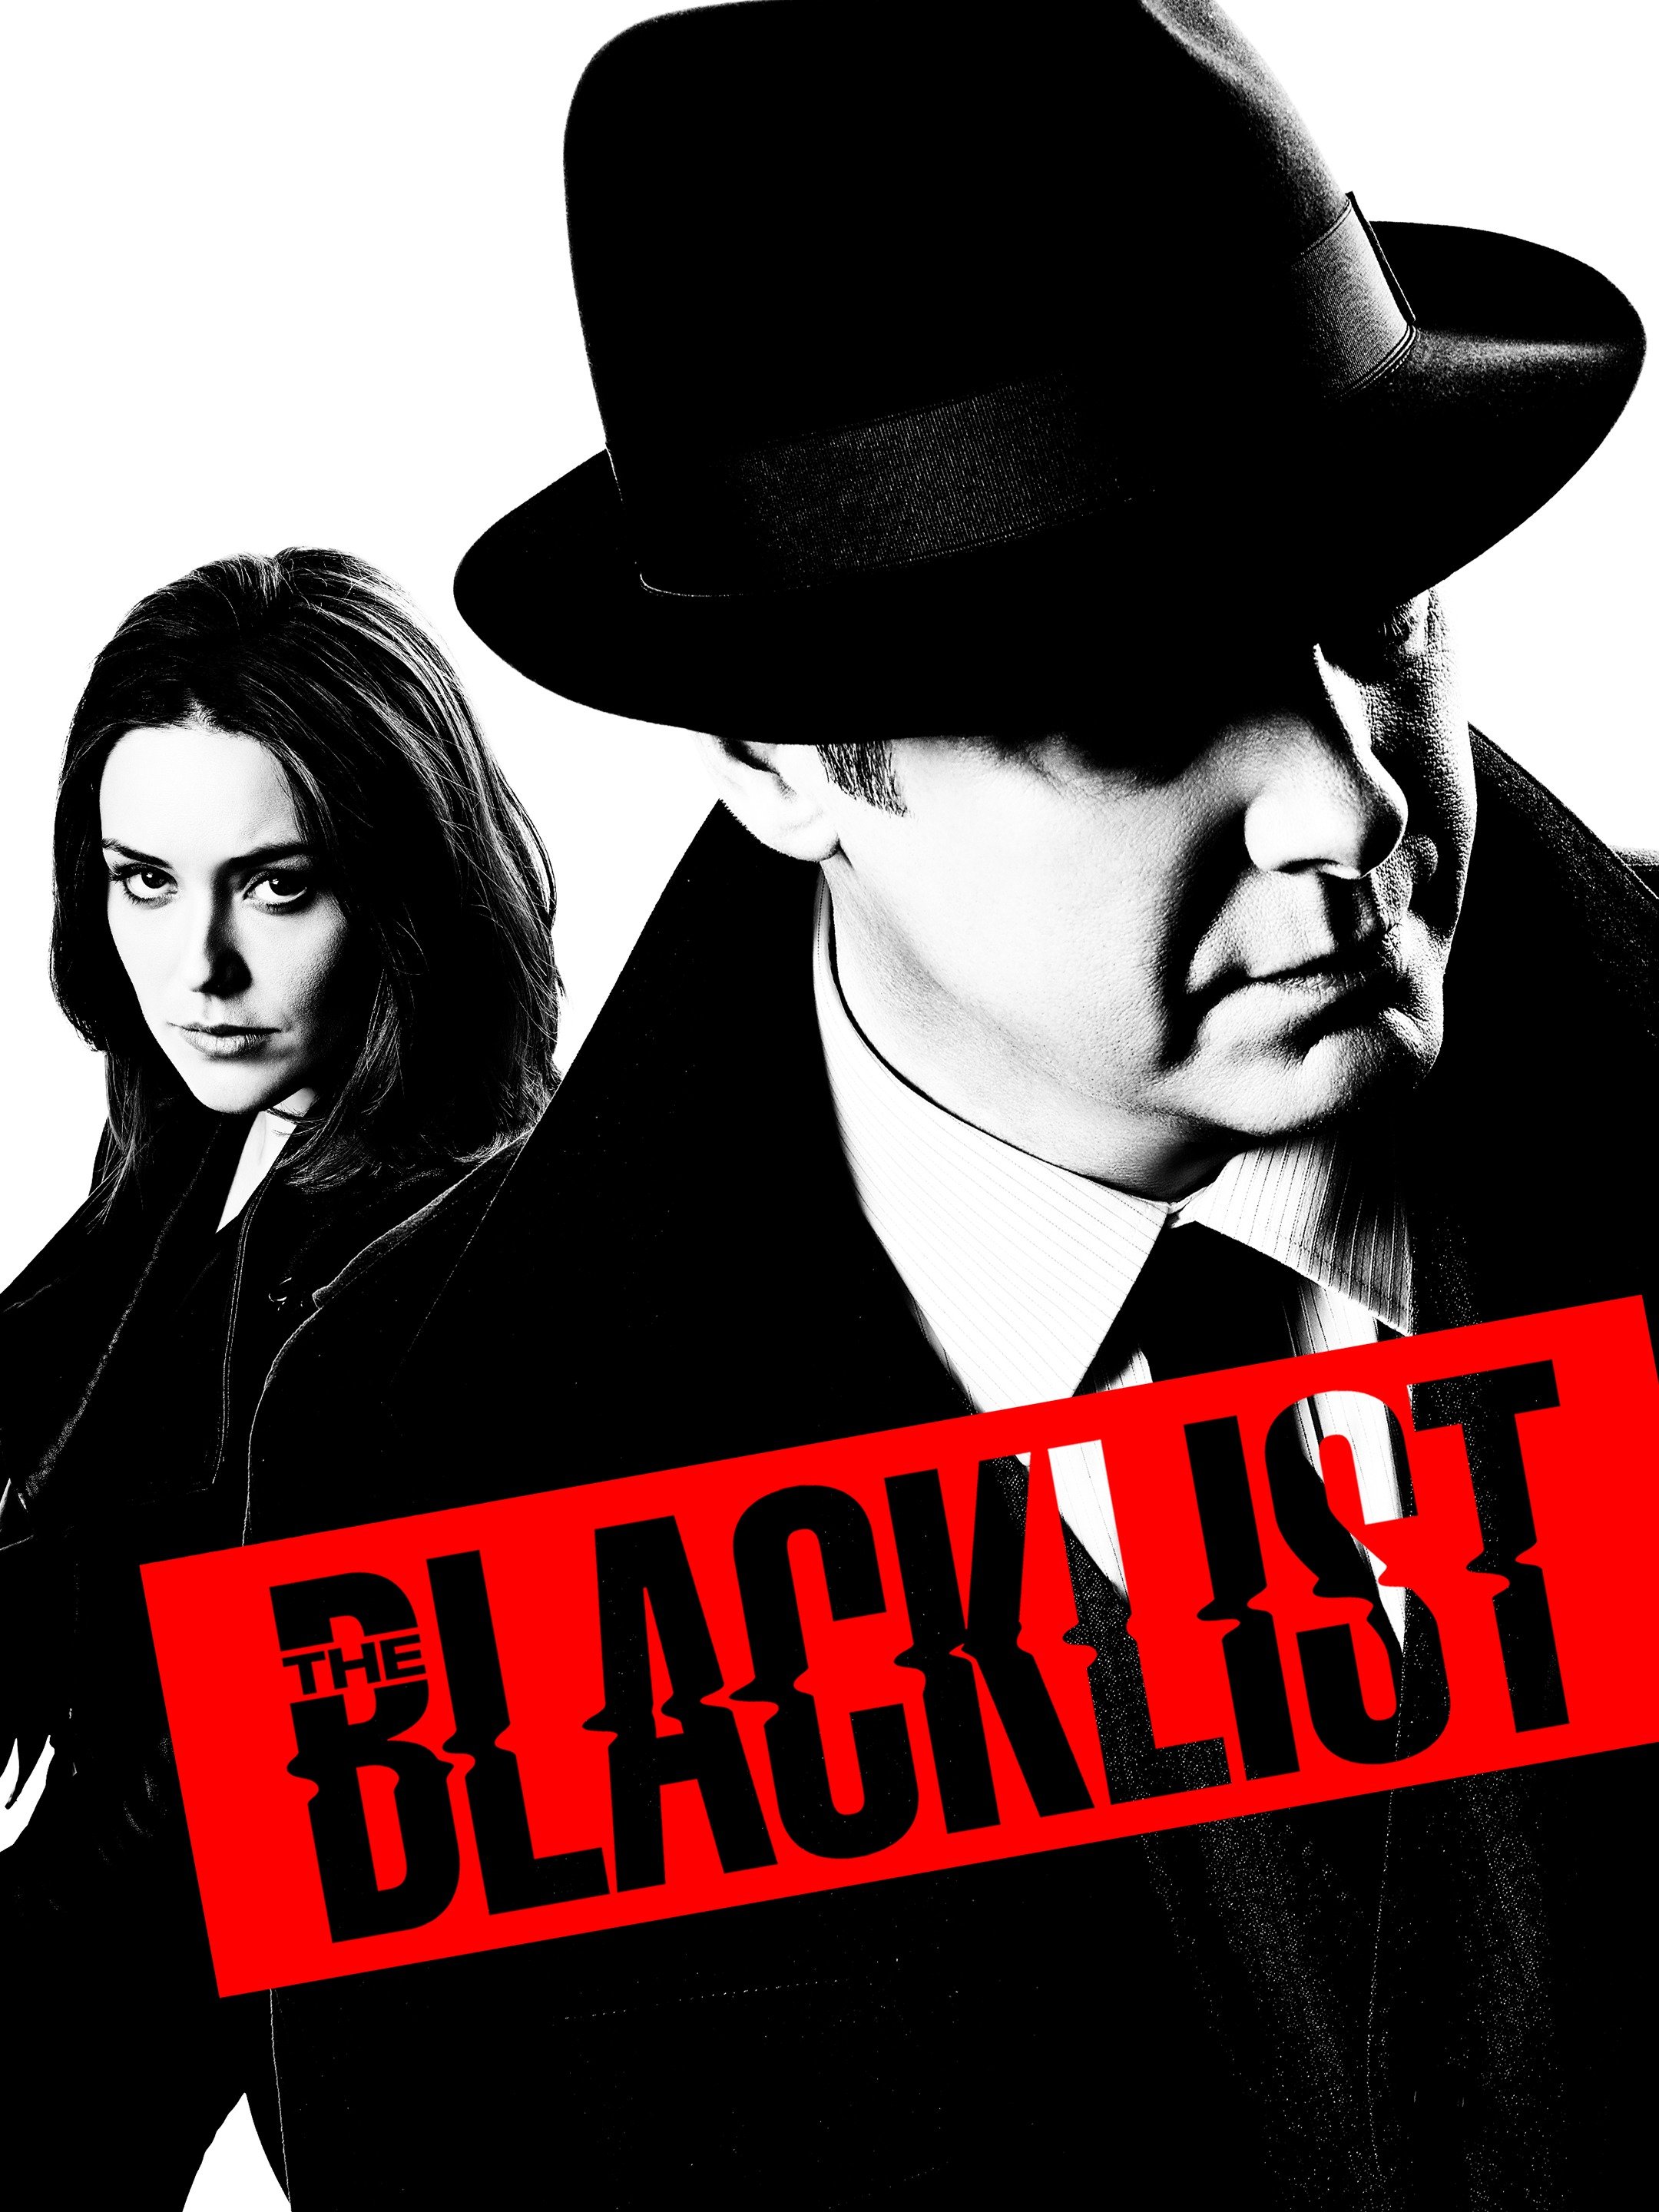 blacklist season 3 review